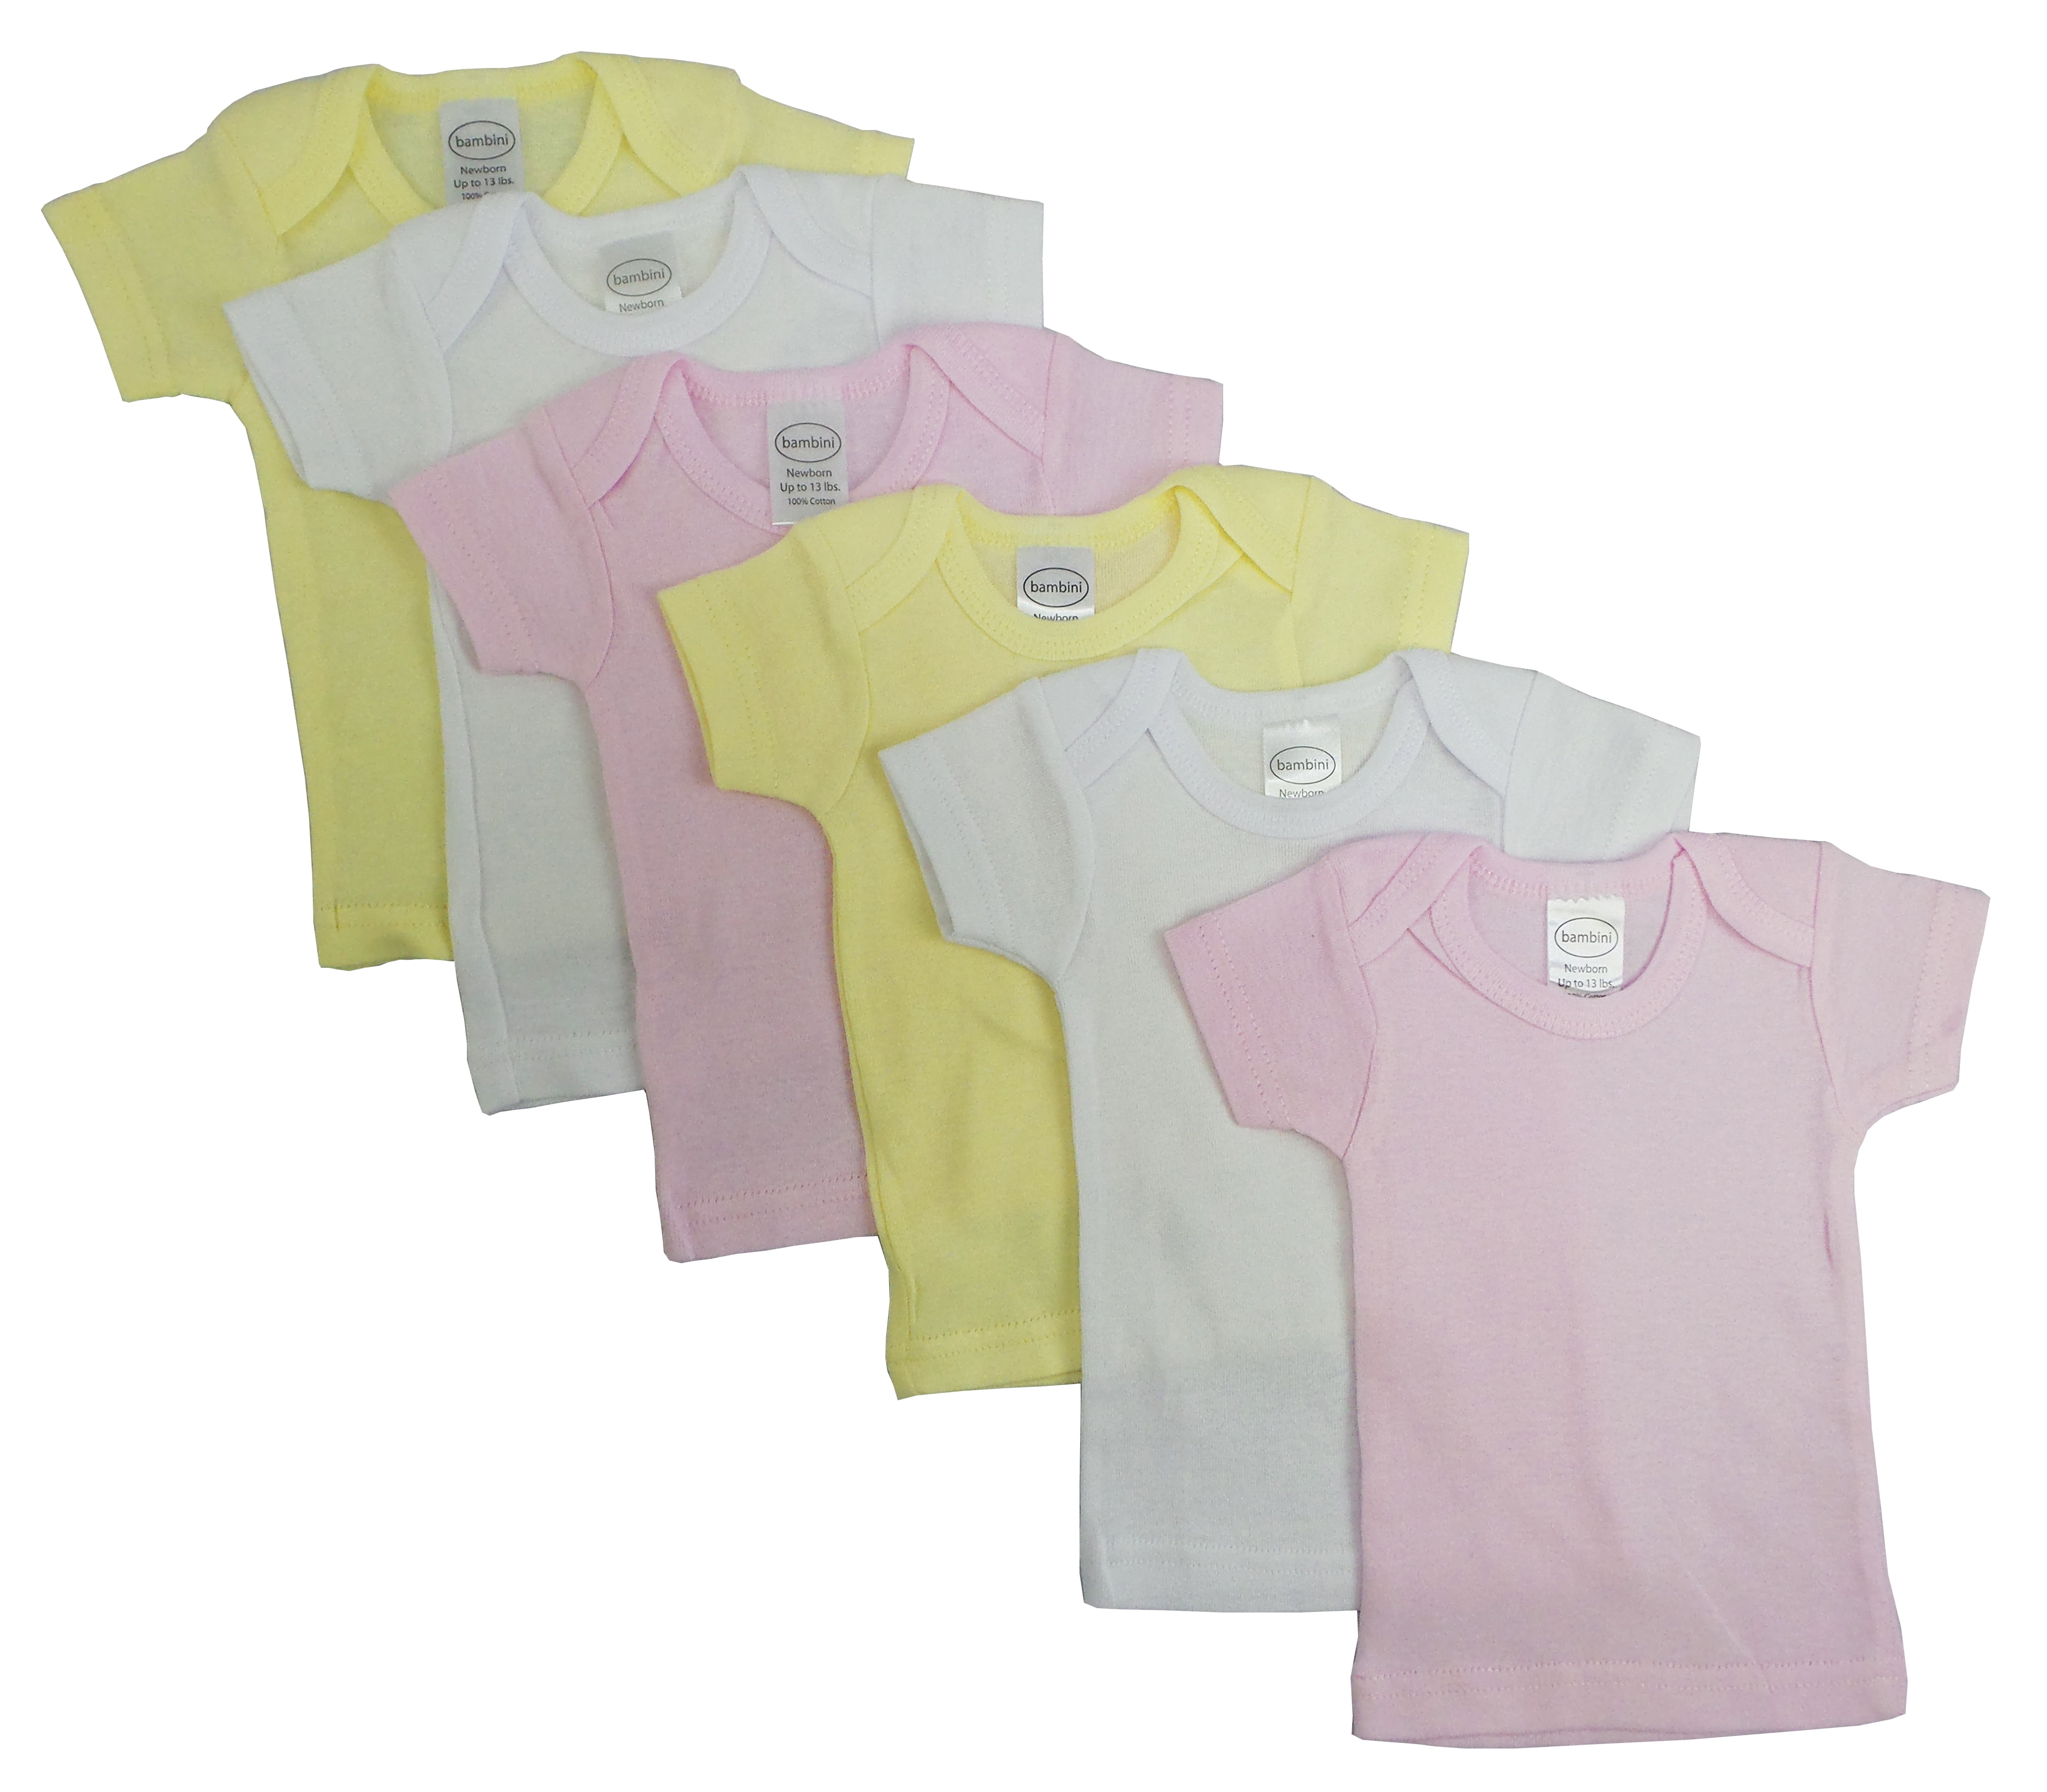 Cs-057l-057l Girls Pastel Variety Short Sleeve Lap T-shirts, Assorted - Large